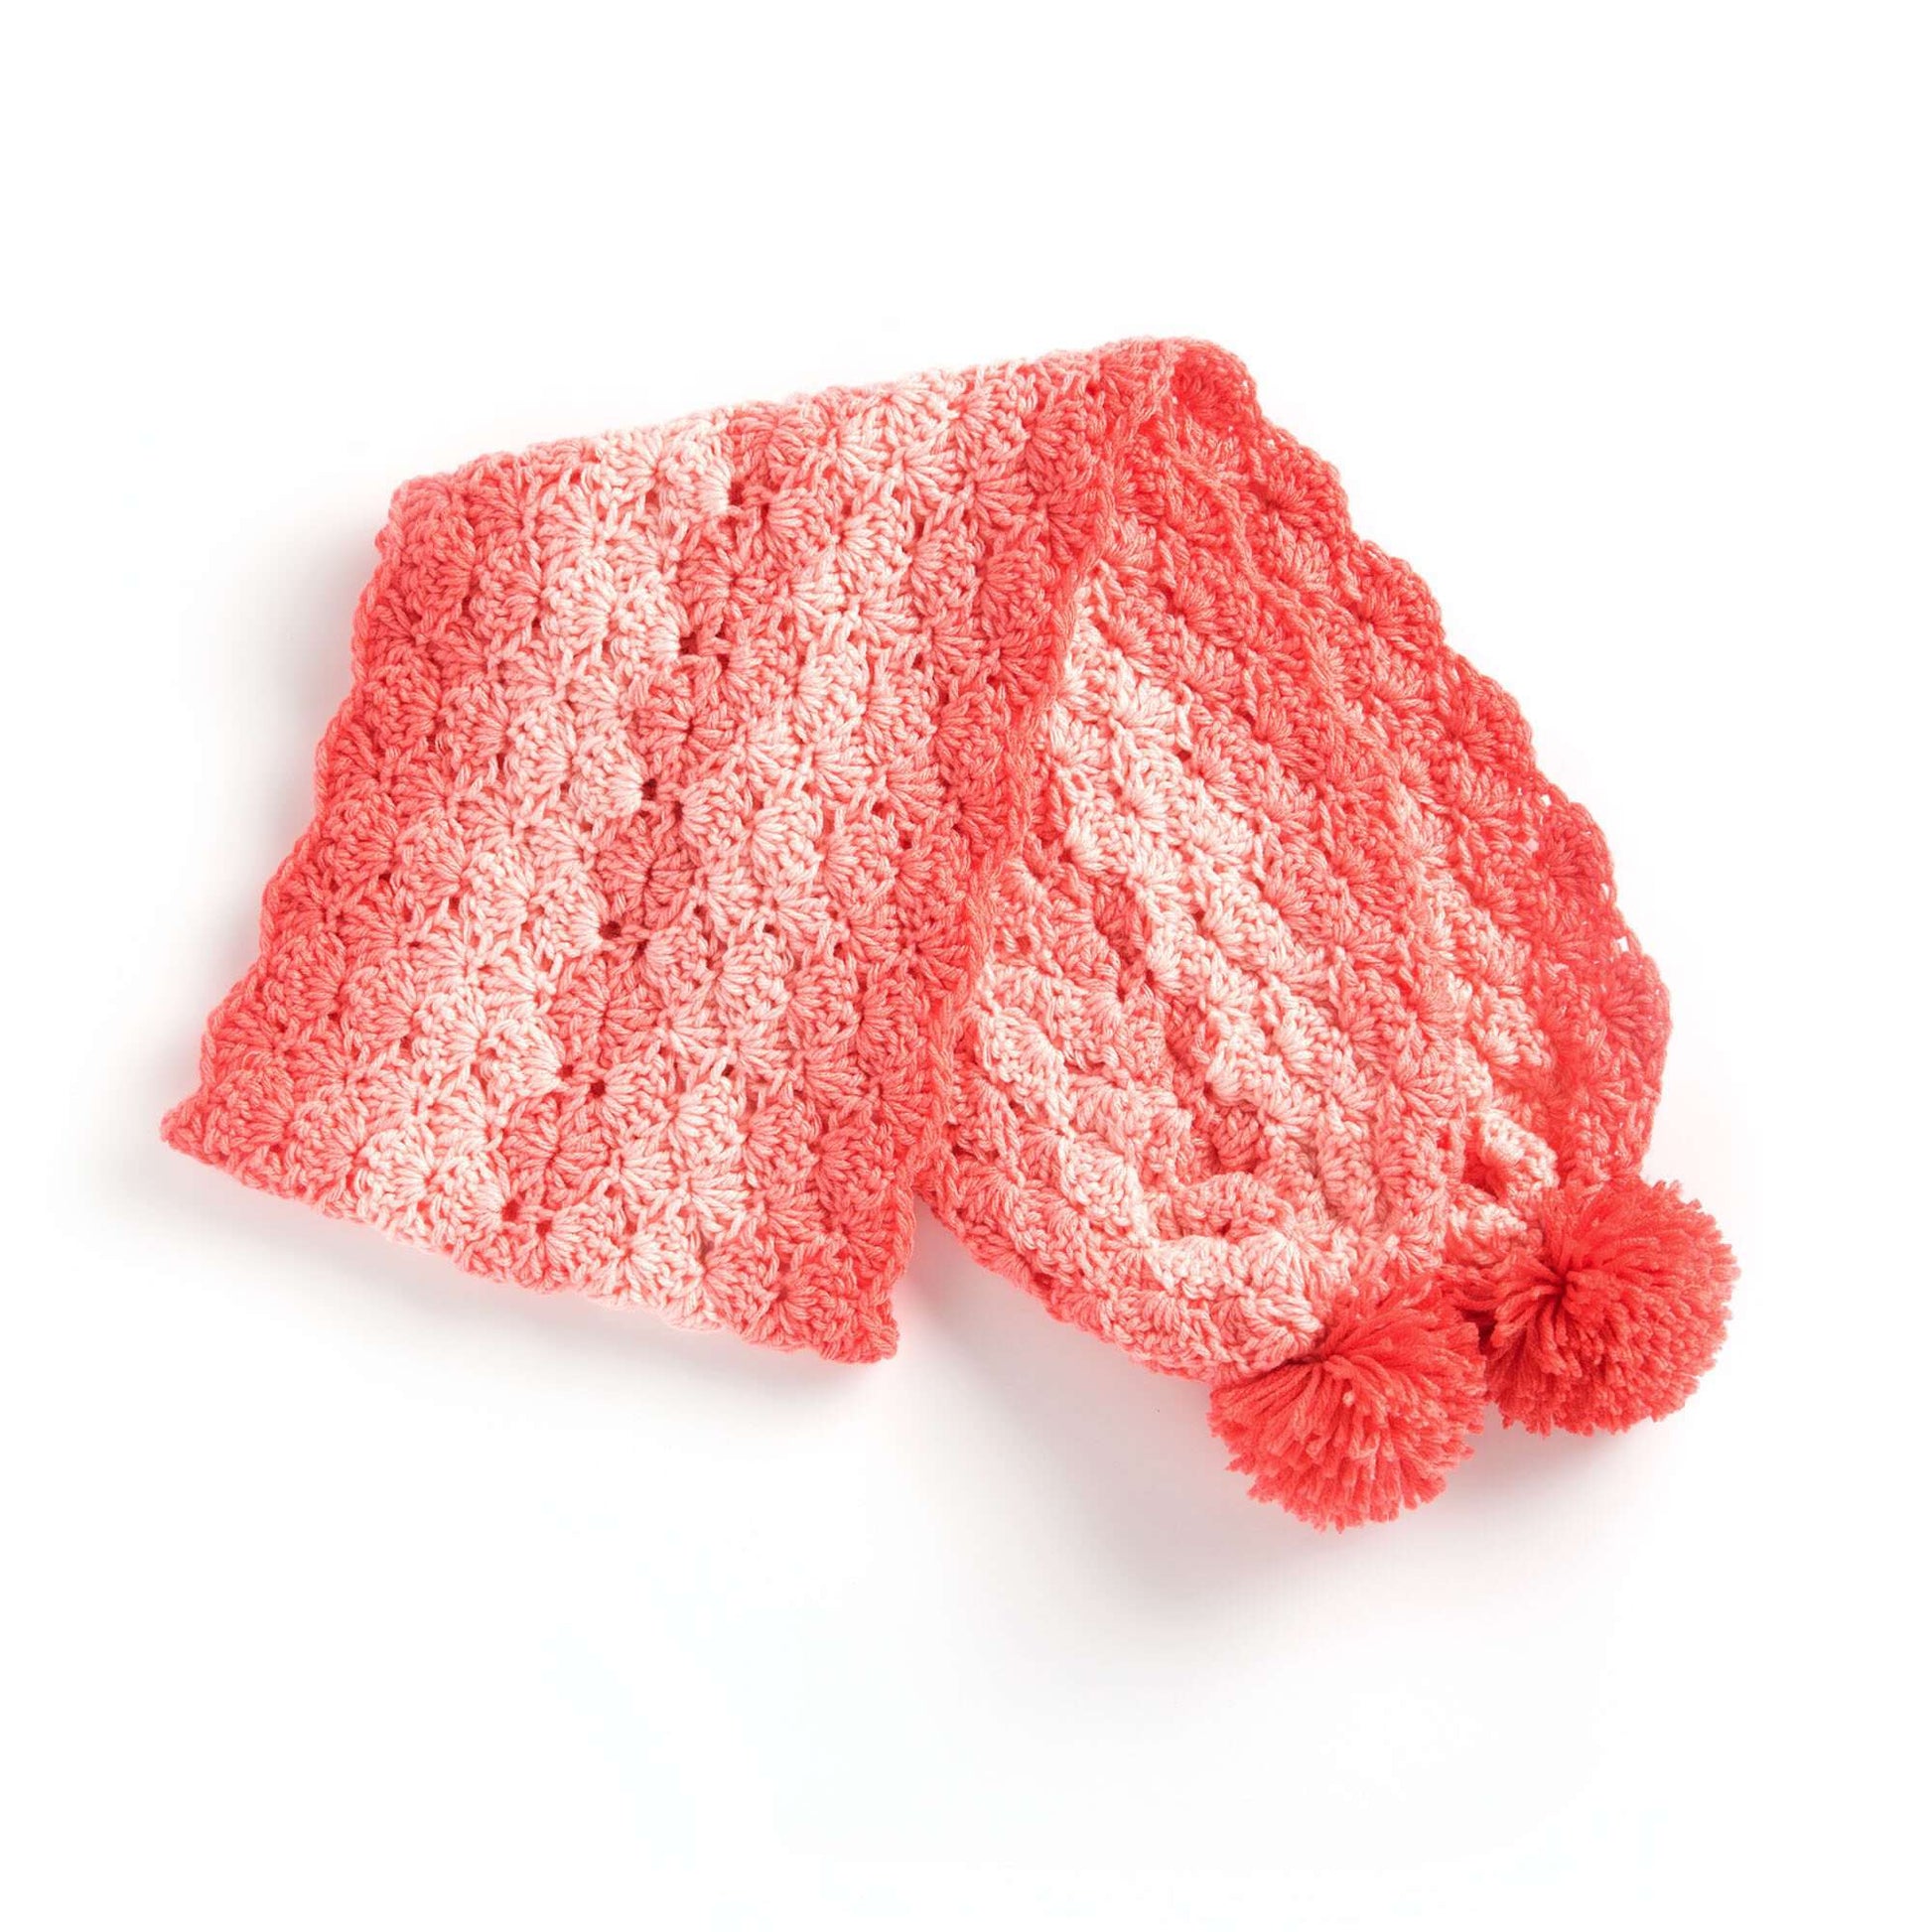 Free Red Heart Crochet Shell Stitch Basic Scarf Pattern